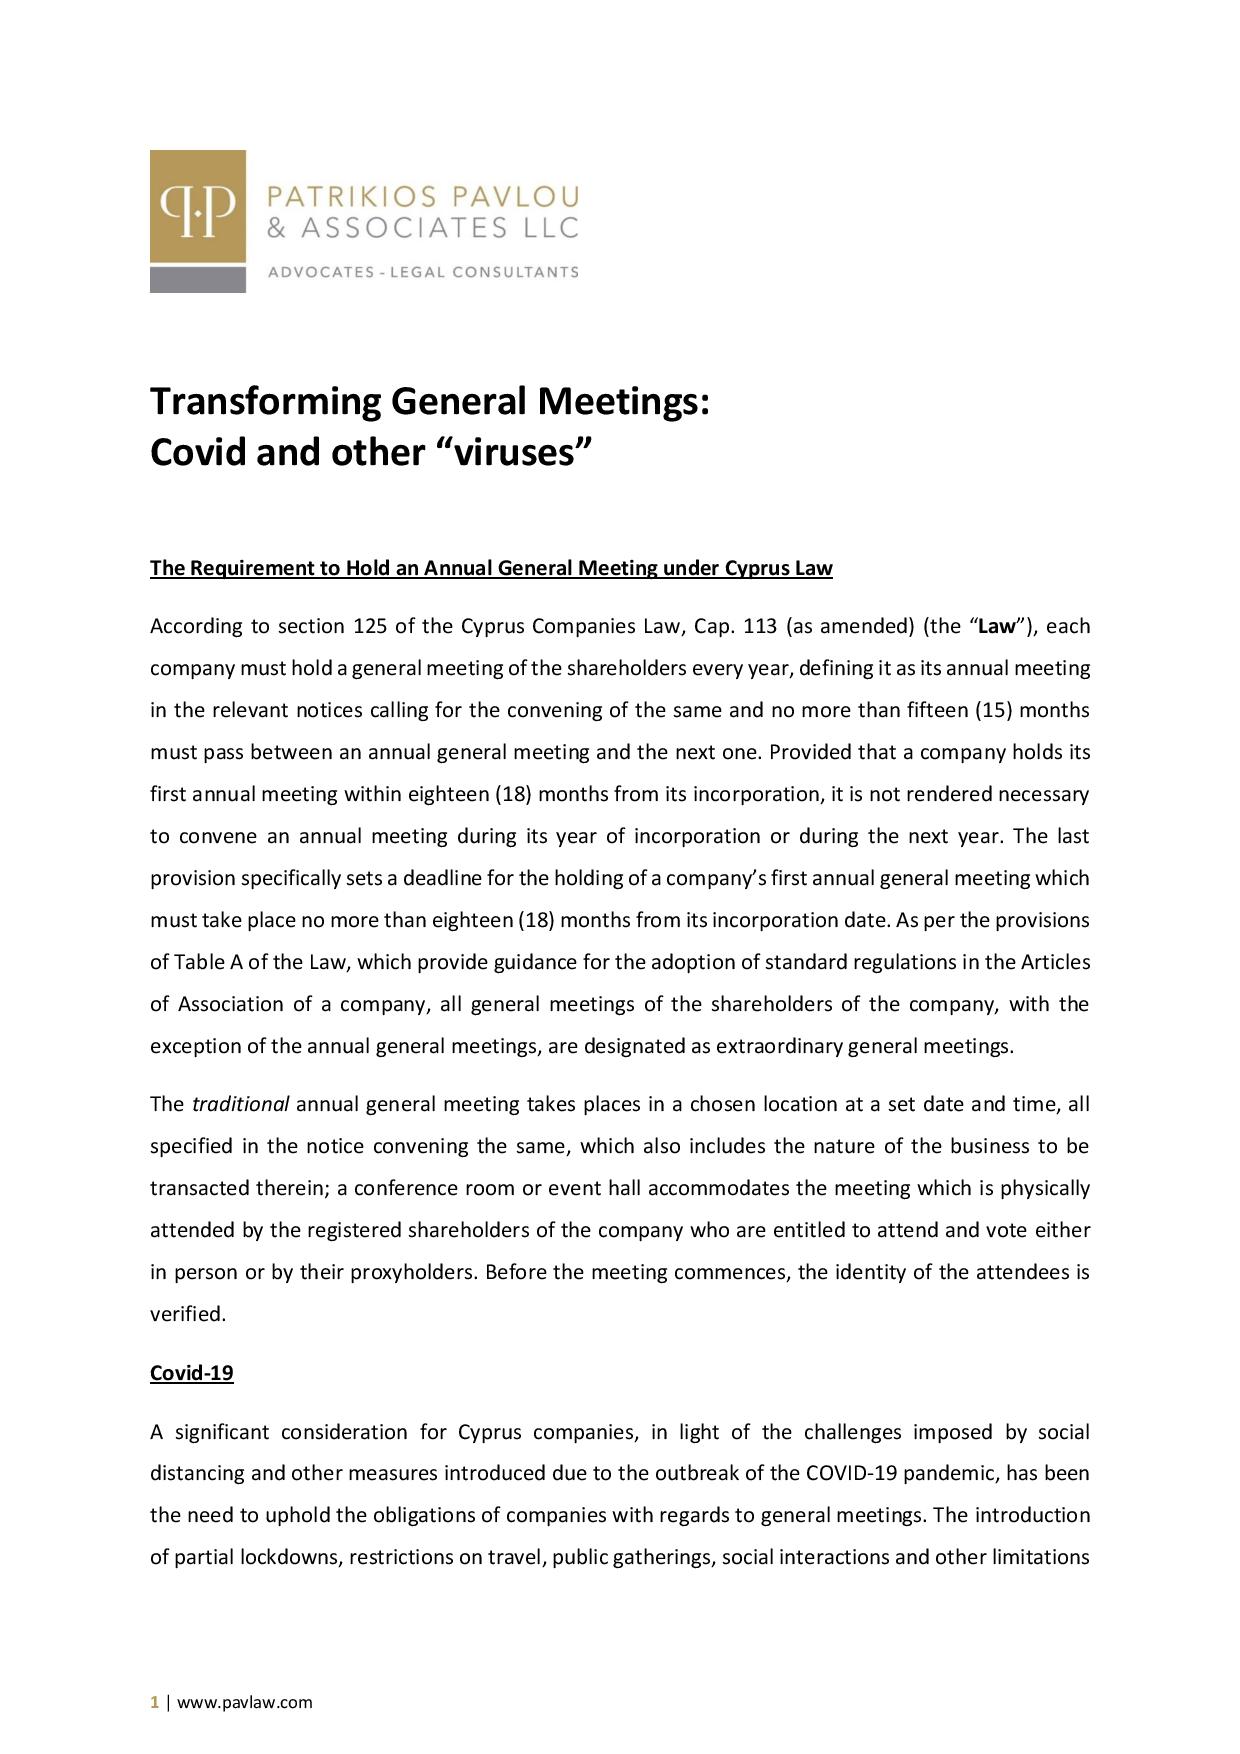 Patrikios Pavlou & Associates LLC: Transforming General Meetings: Covid and other “viruses”